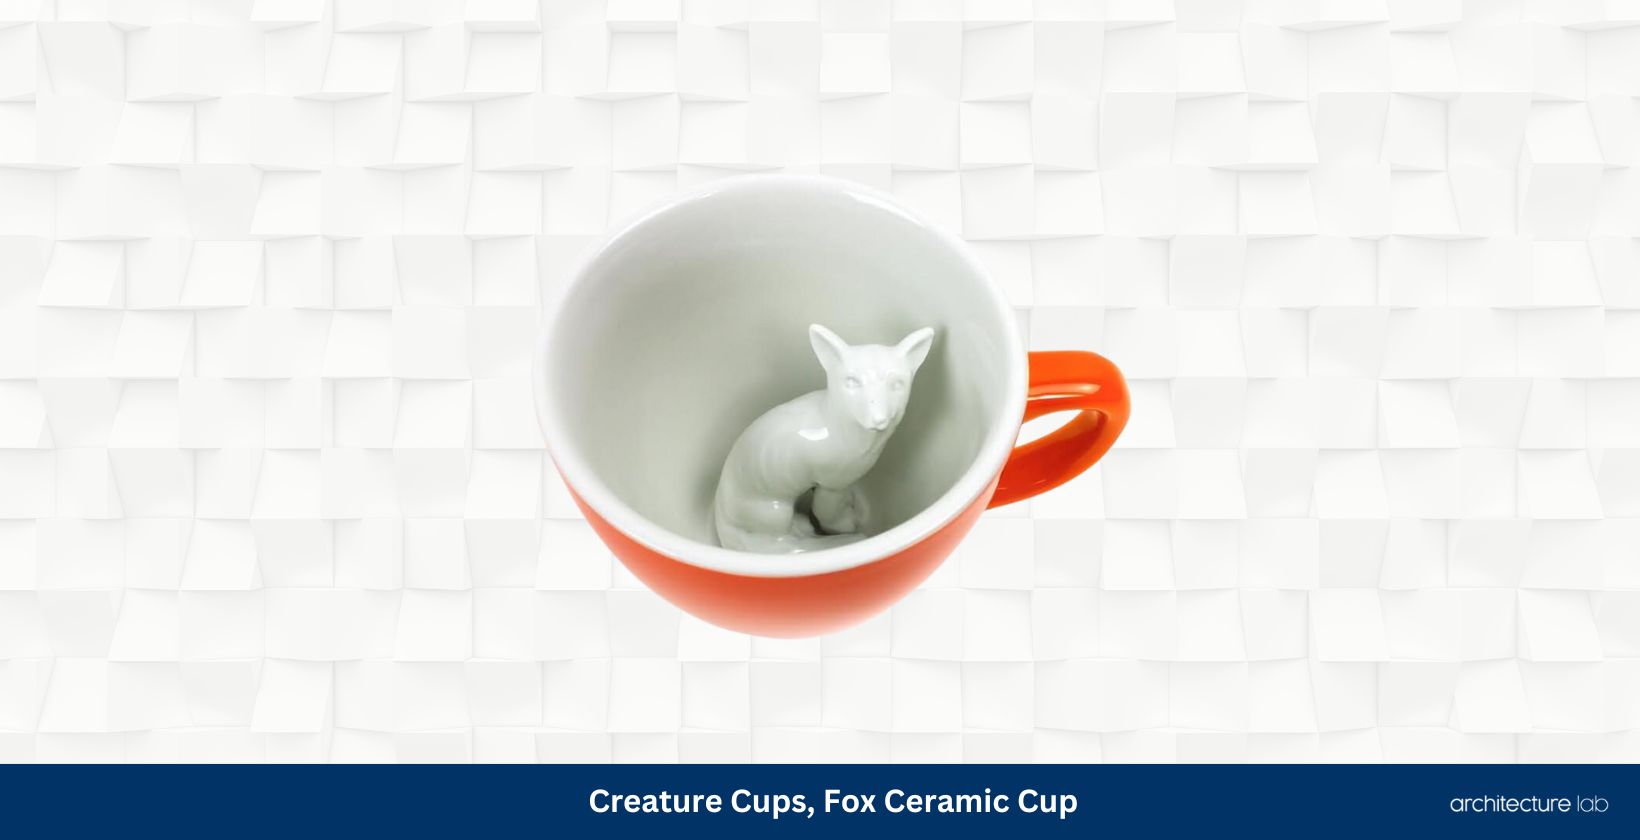 Creature cups